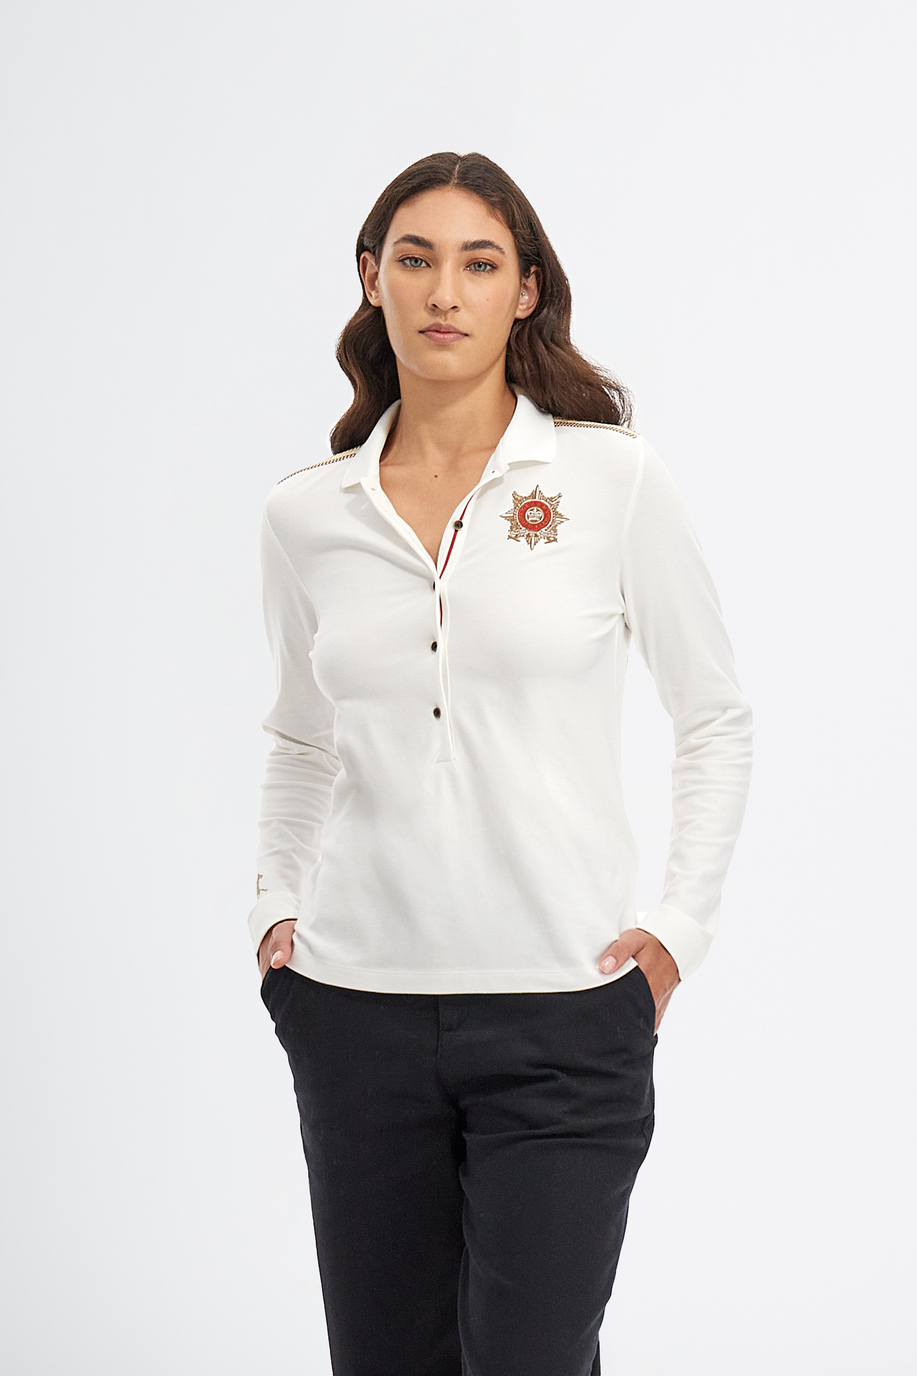 Women’s Polo Guards Long Sleeves Cotton Piqué Stretch - Sporty chic wear | La Martina - Official Online Shop